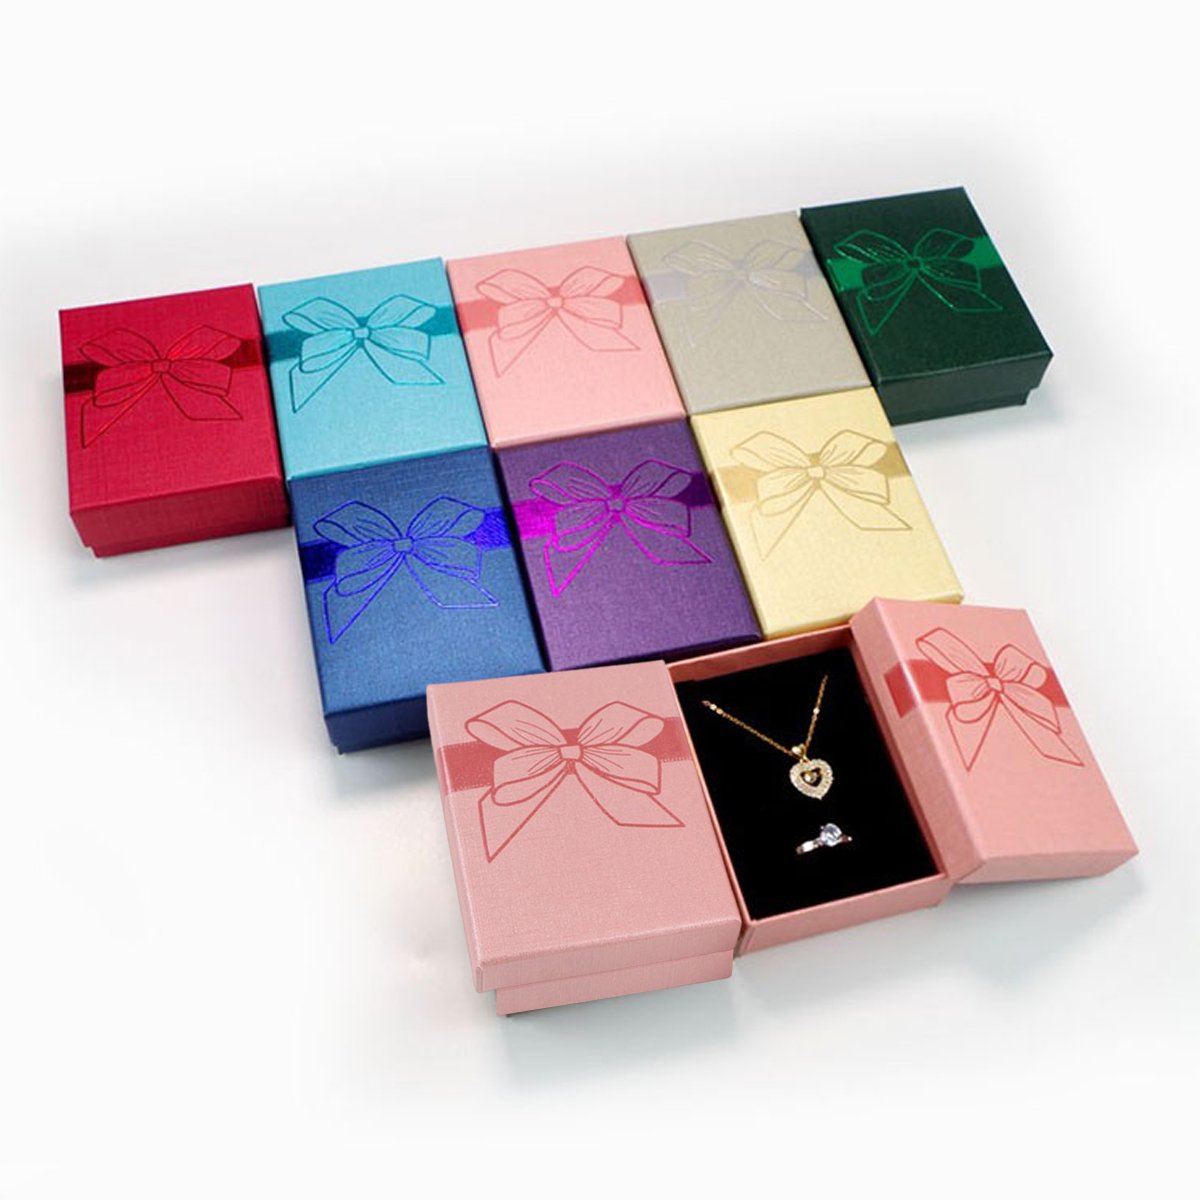 Elegant Jewelry Packaging Box Set for Beautiful Display